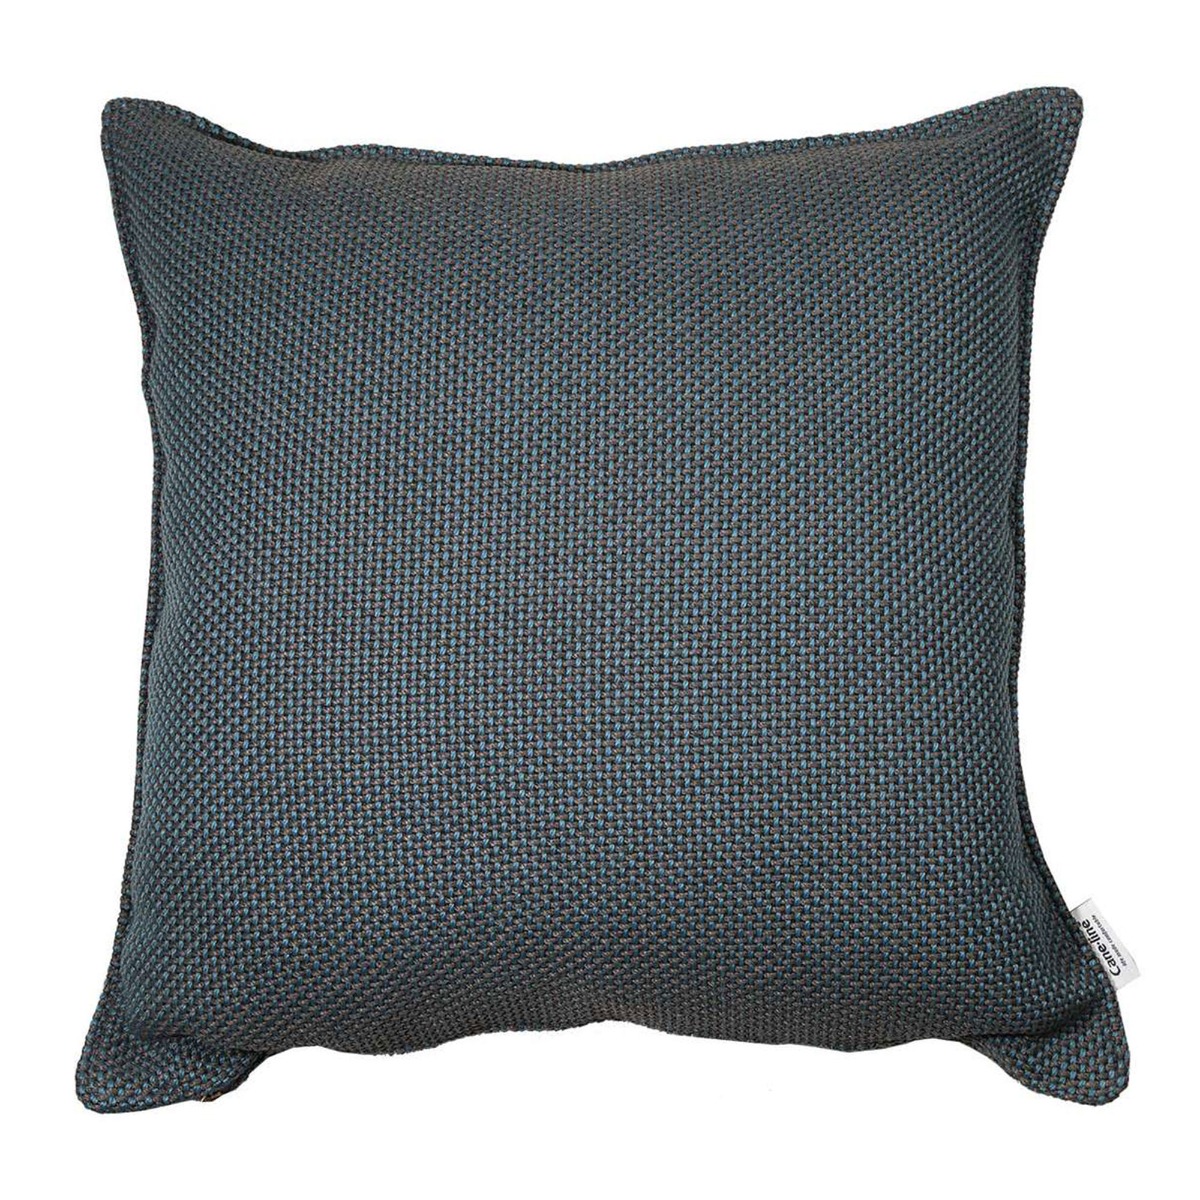 Cane Line Focus Scatter Cushion 50x50x12cm, Square, Blue | Barker & Stonehouse